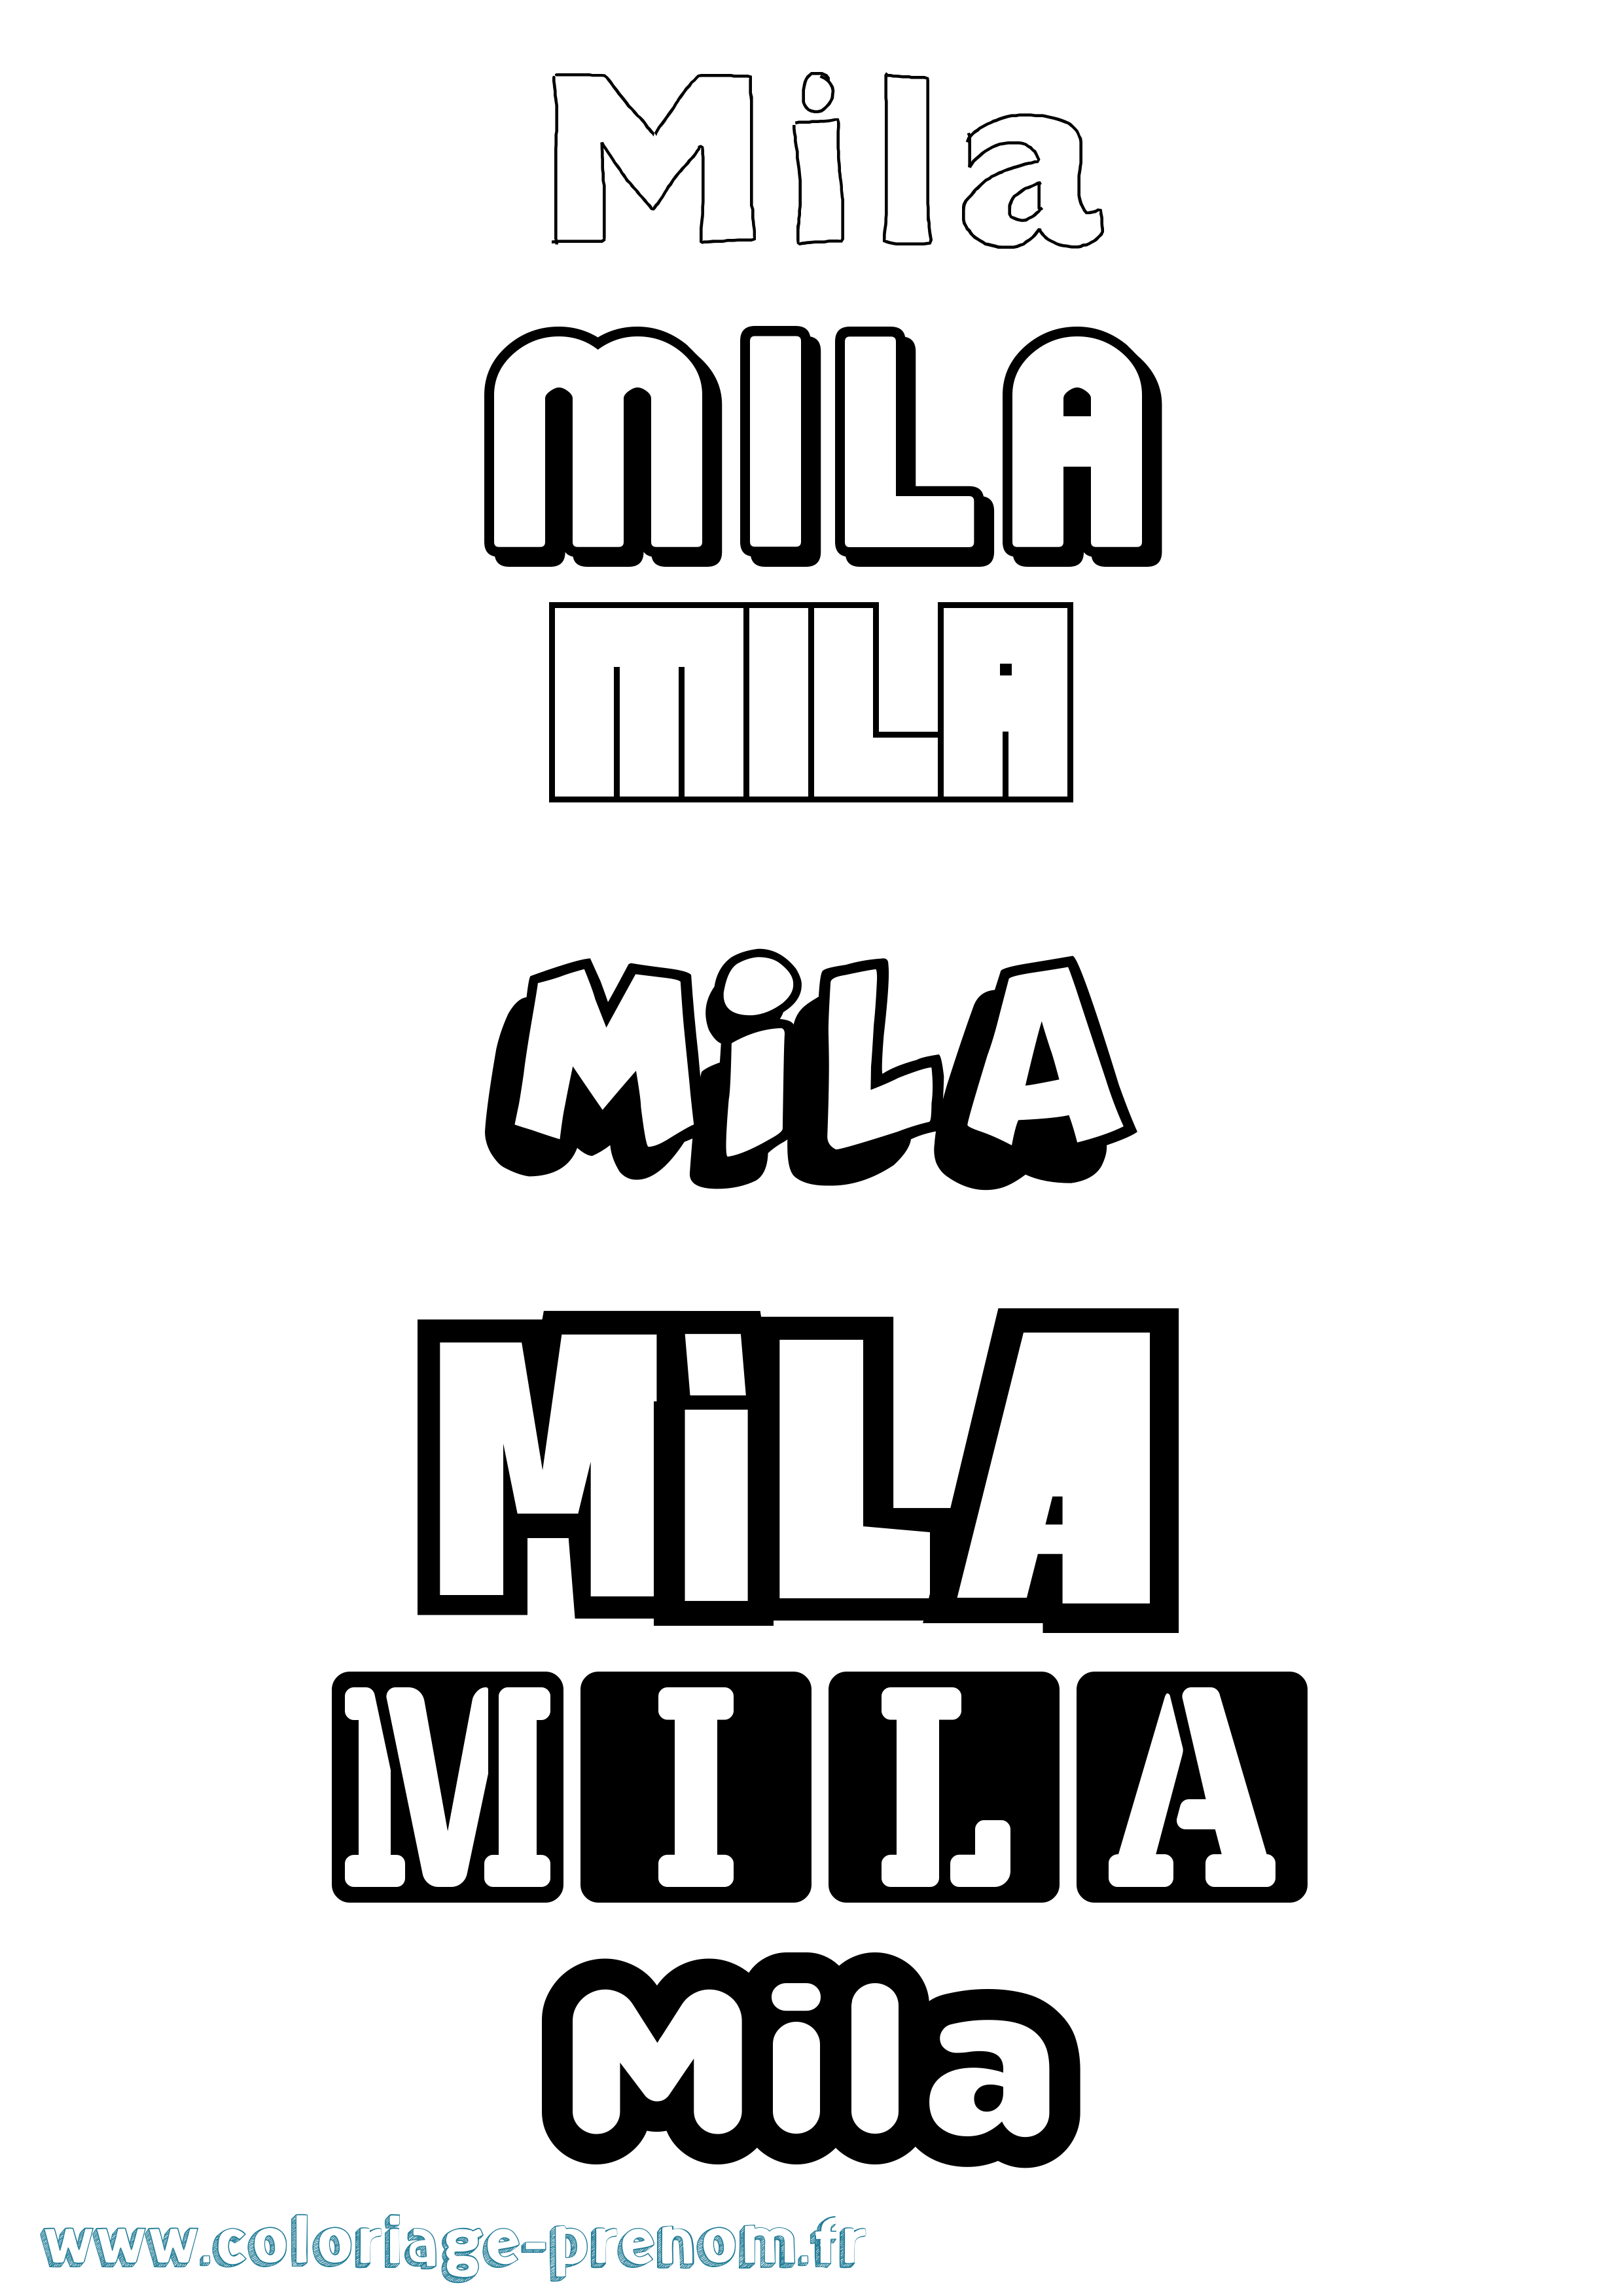 Coloriage prénom Mila